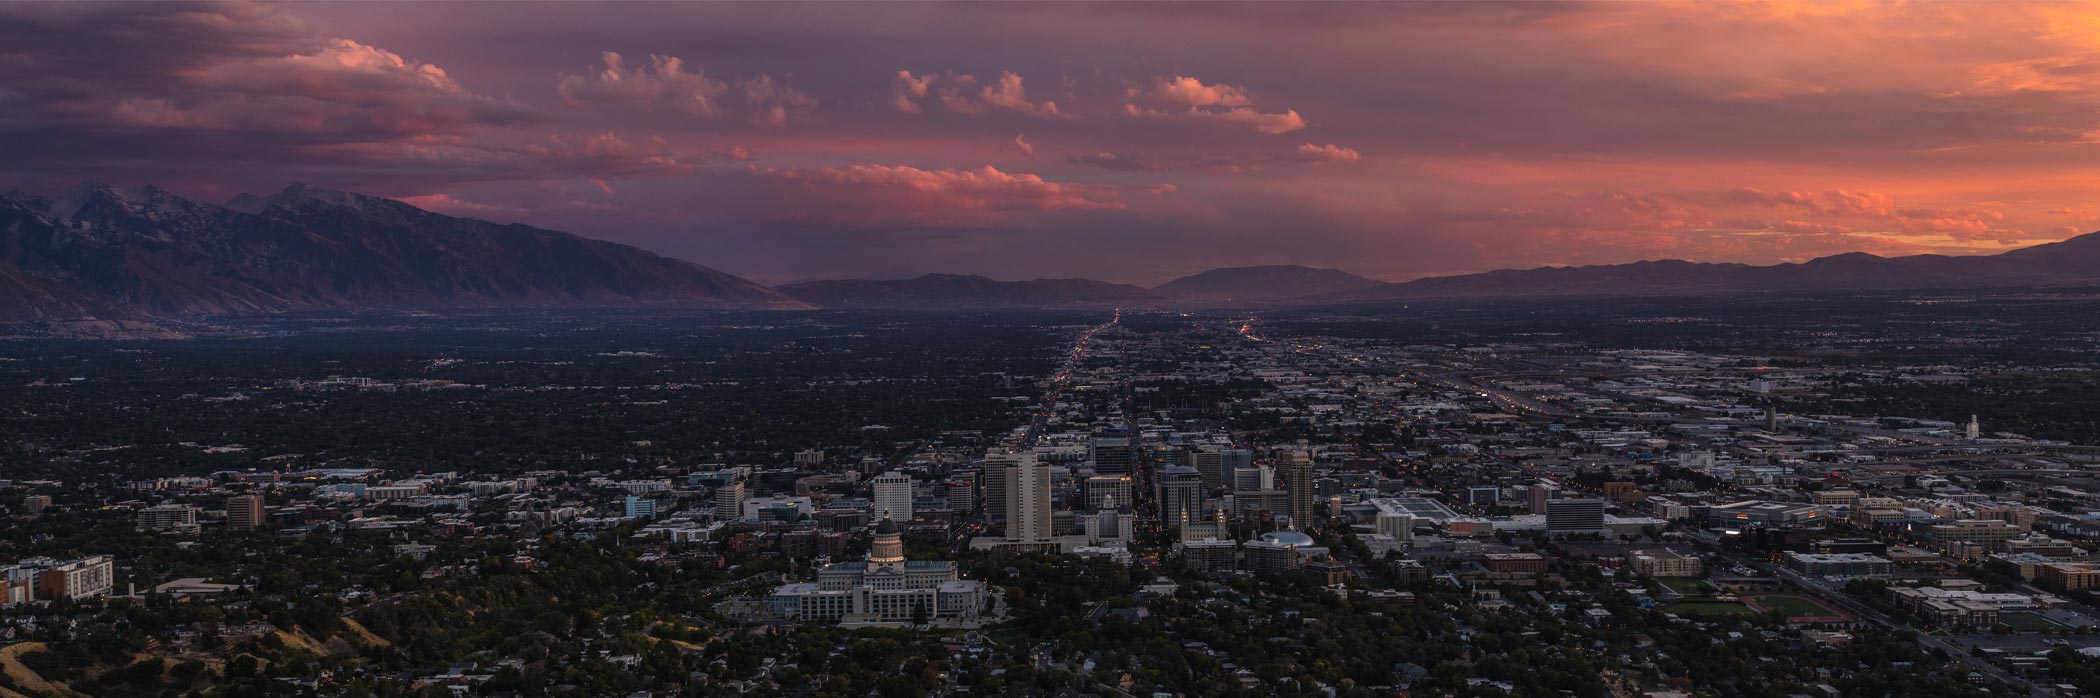 Salt Lake City Views - image by Logan Lambert (Unsplash)